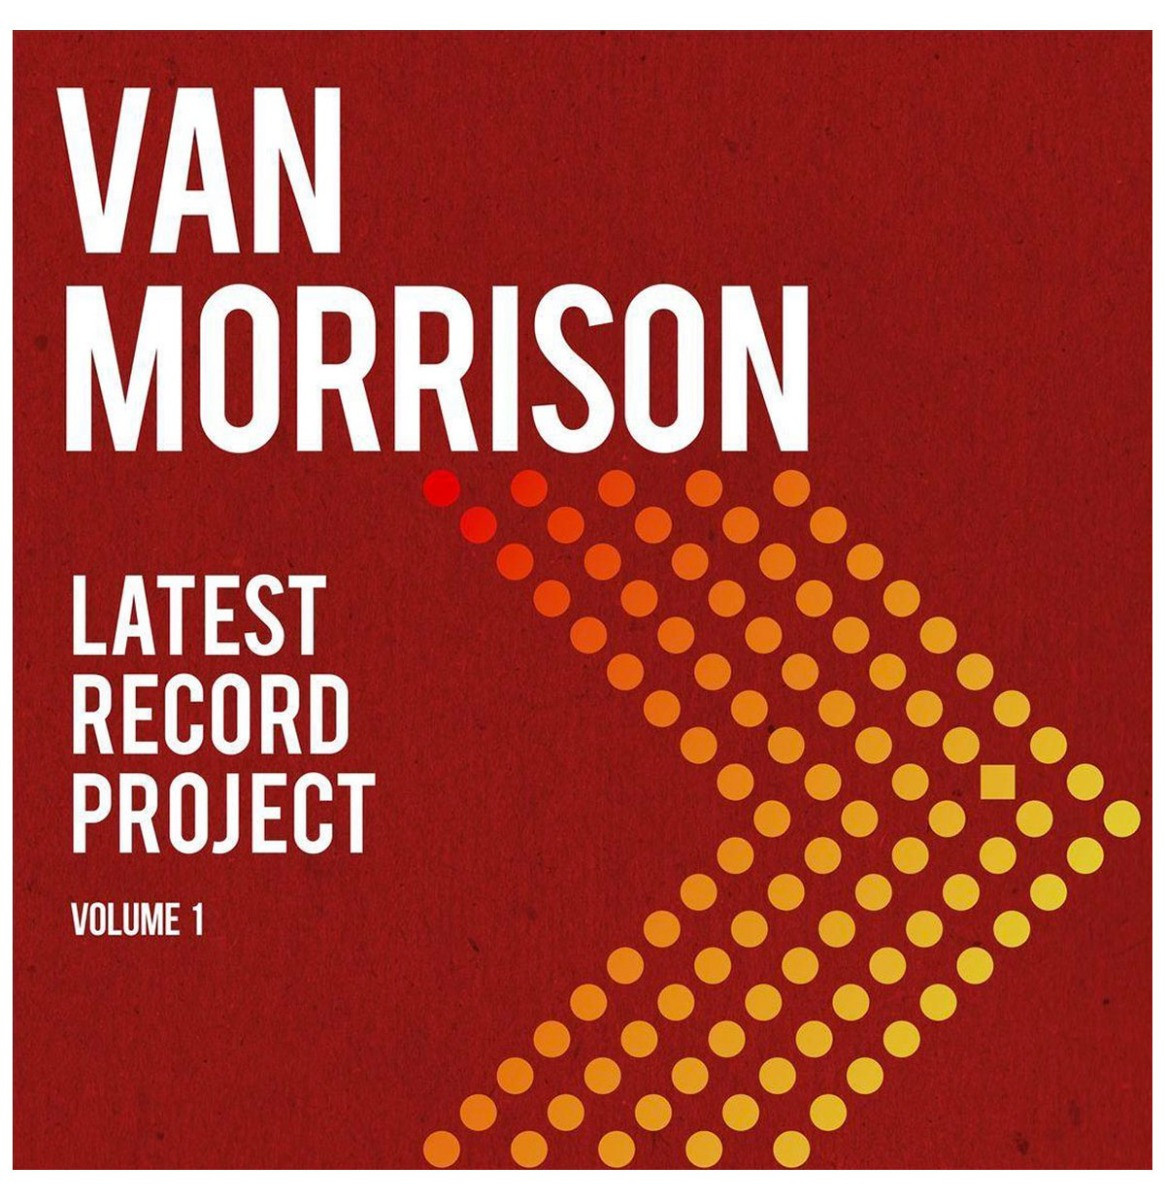 Van Morrison - Latest Record Project Volume 1 - 3LP + Songtekst Boek